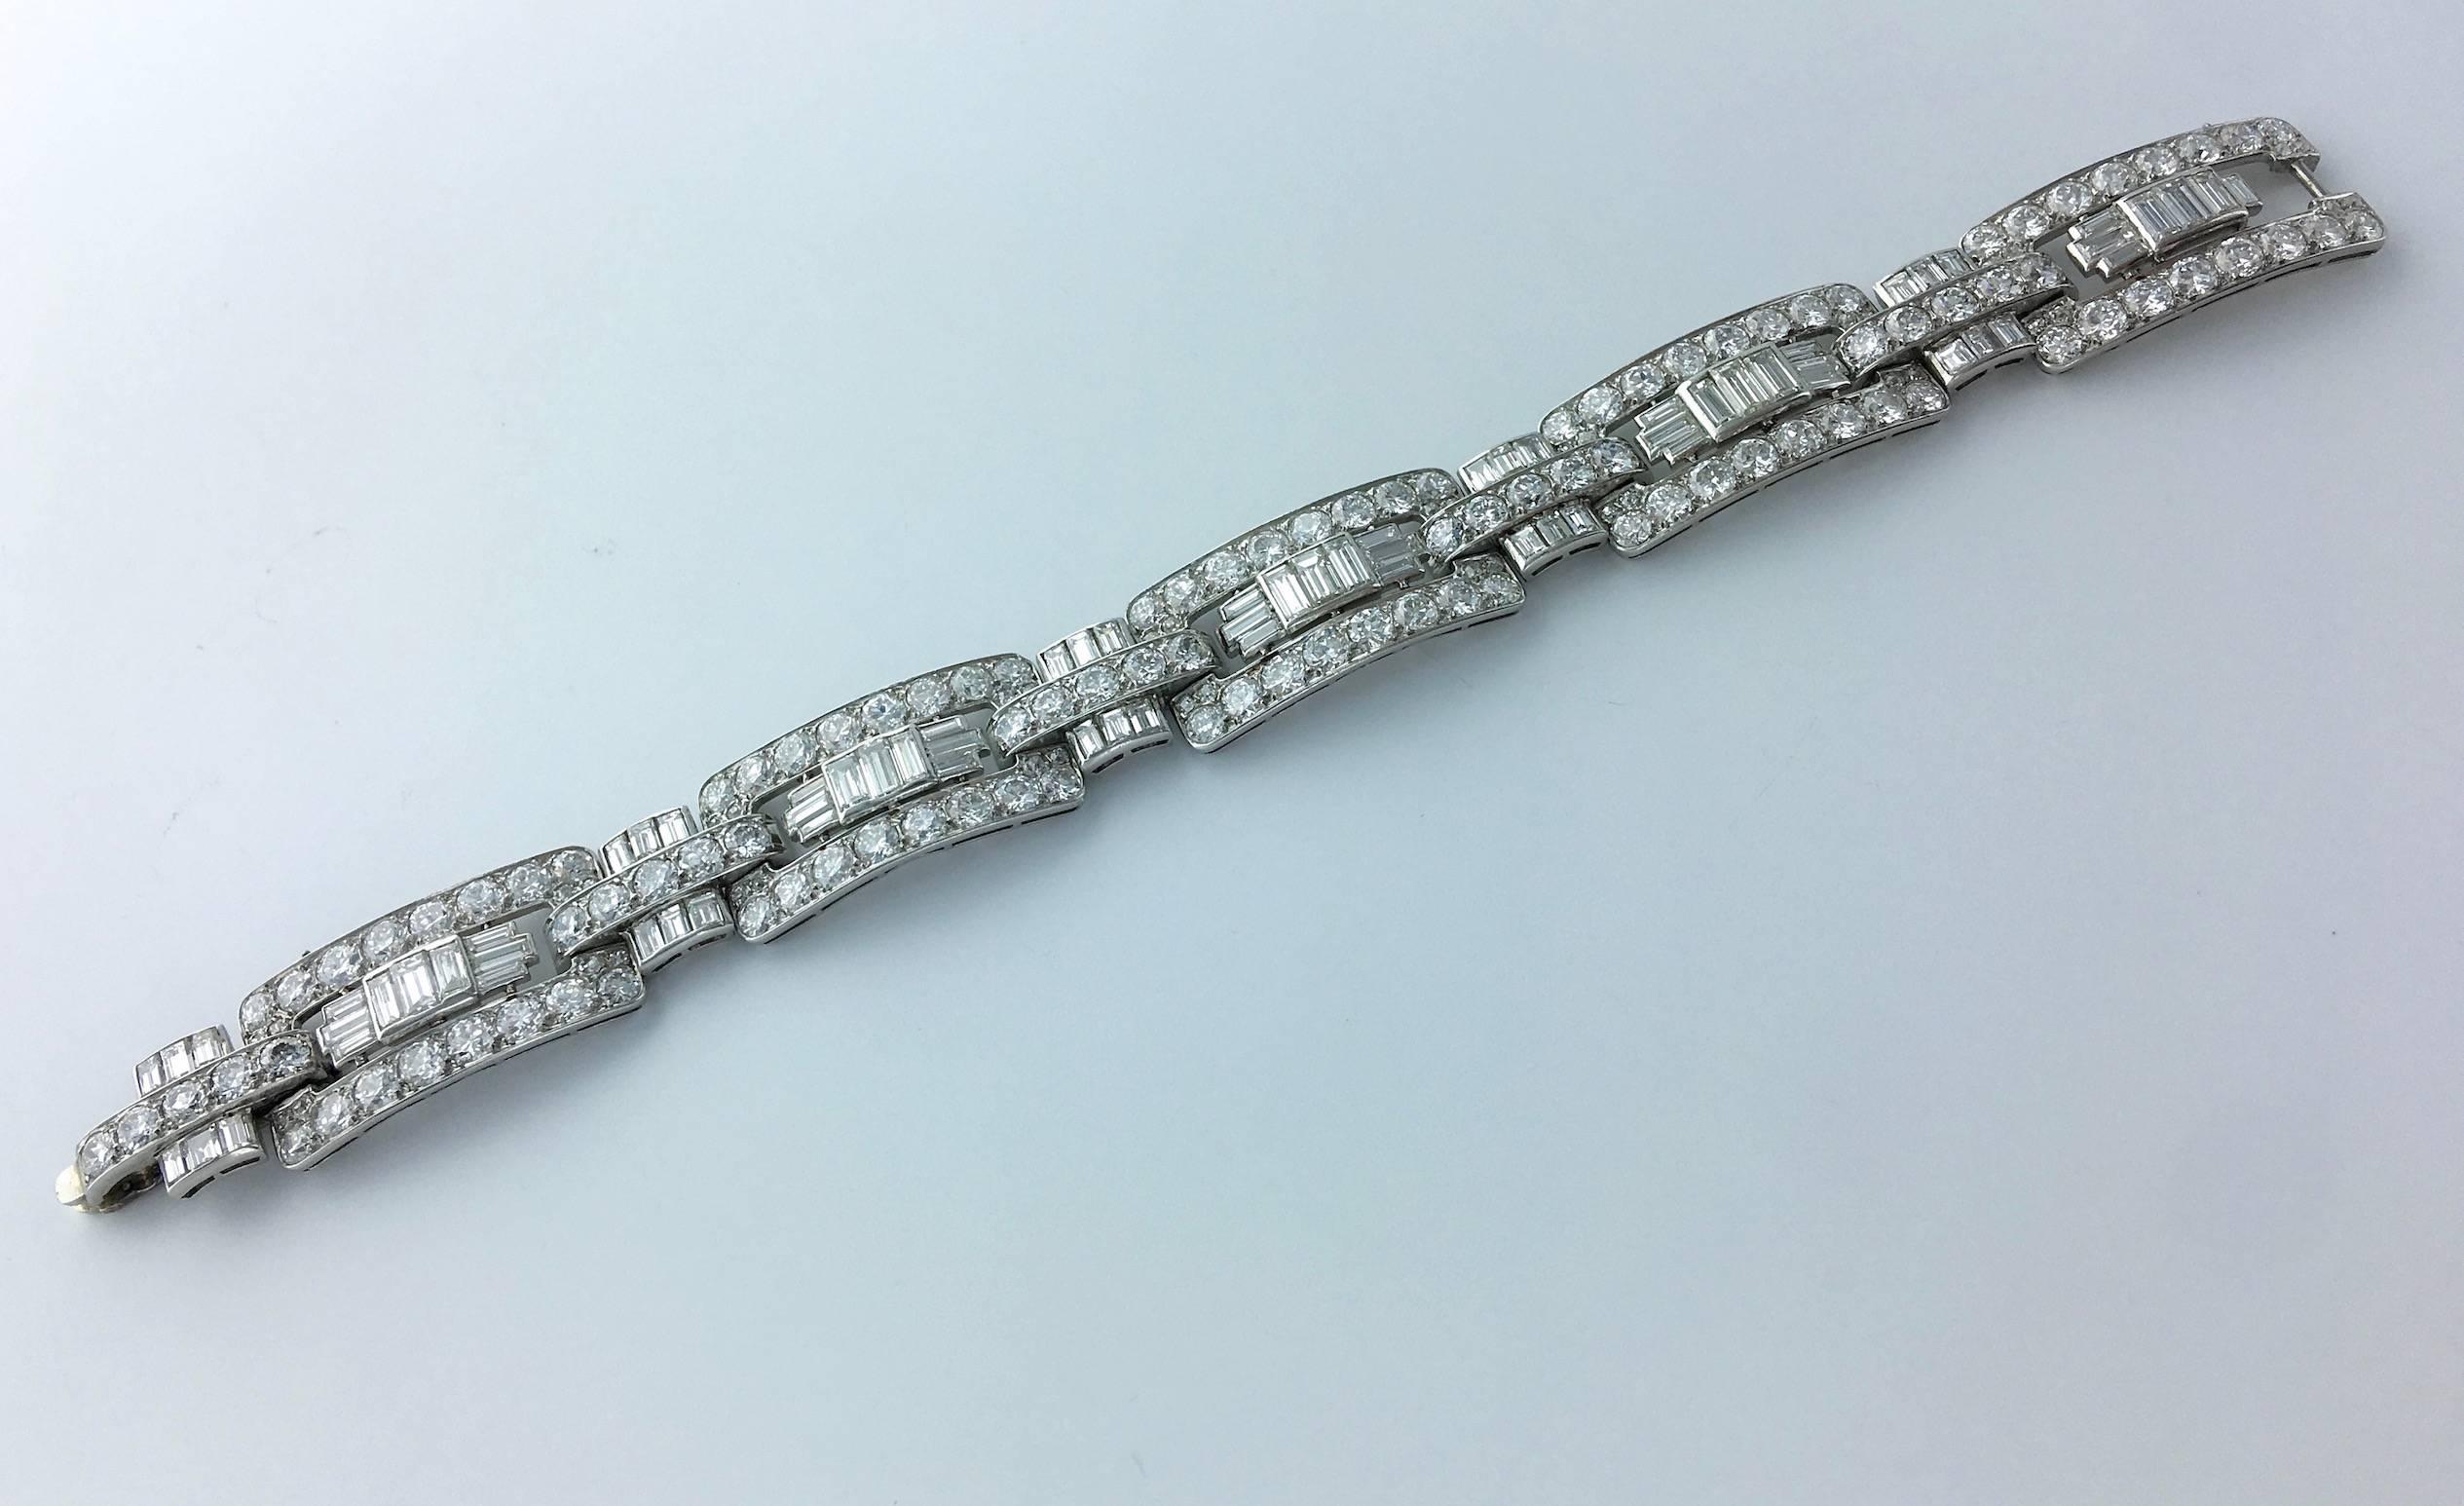 Chic and Stunning full Diamond pave on platinum Bracelet.
Art Deco design. Circa 1930.
Numbered.